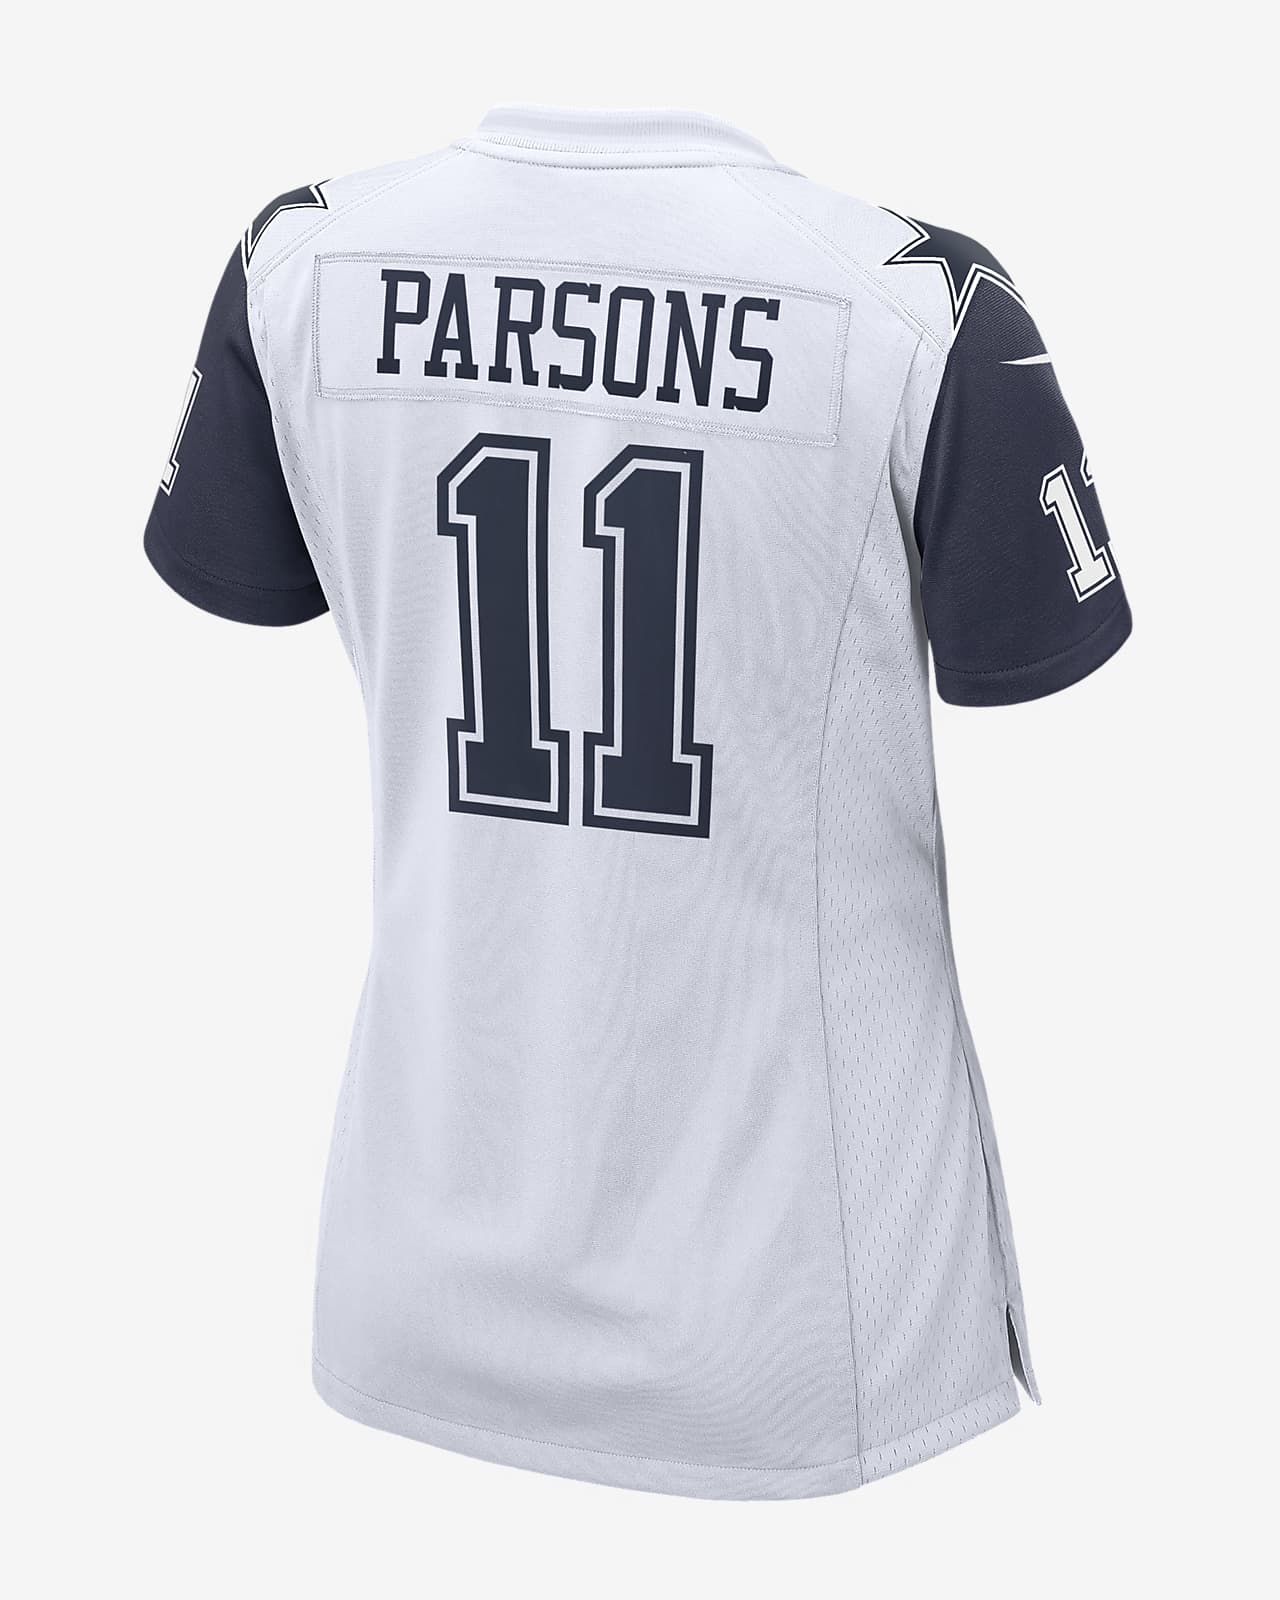 parsons women's jersey